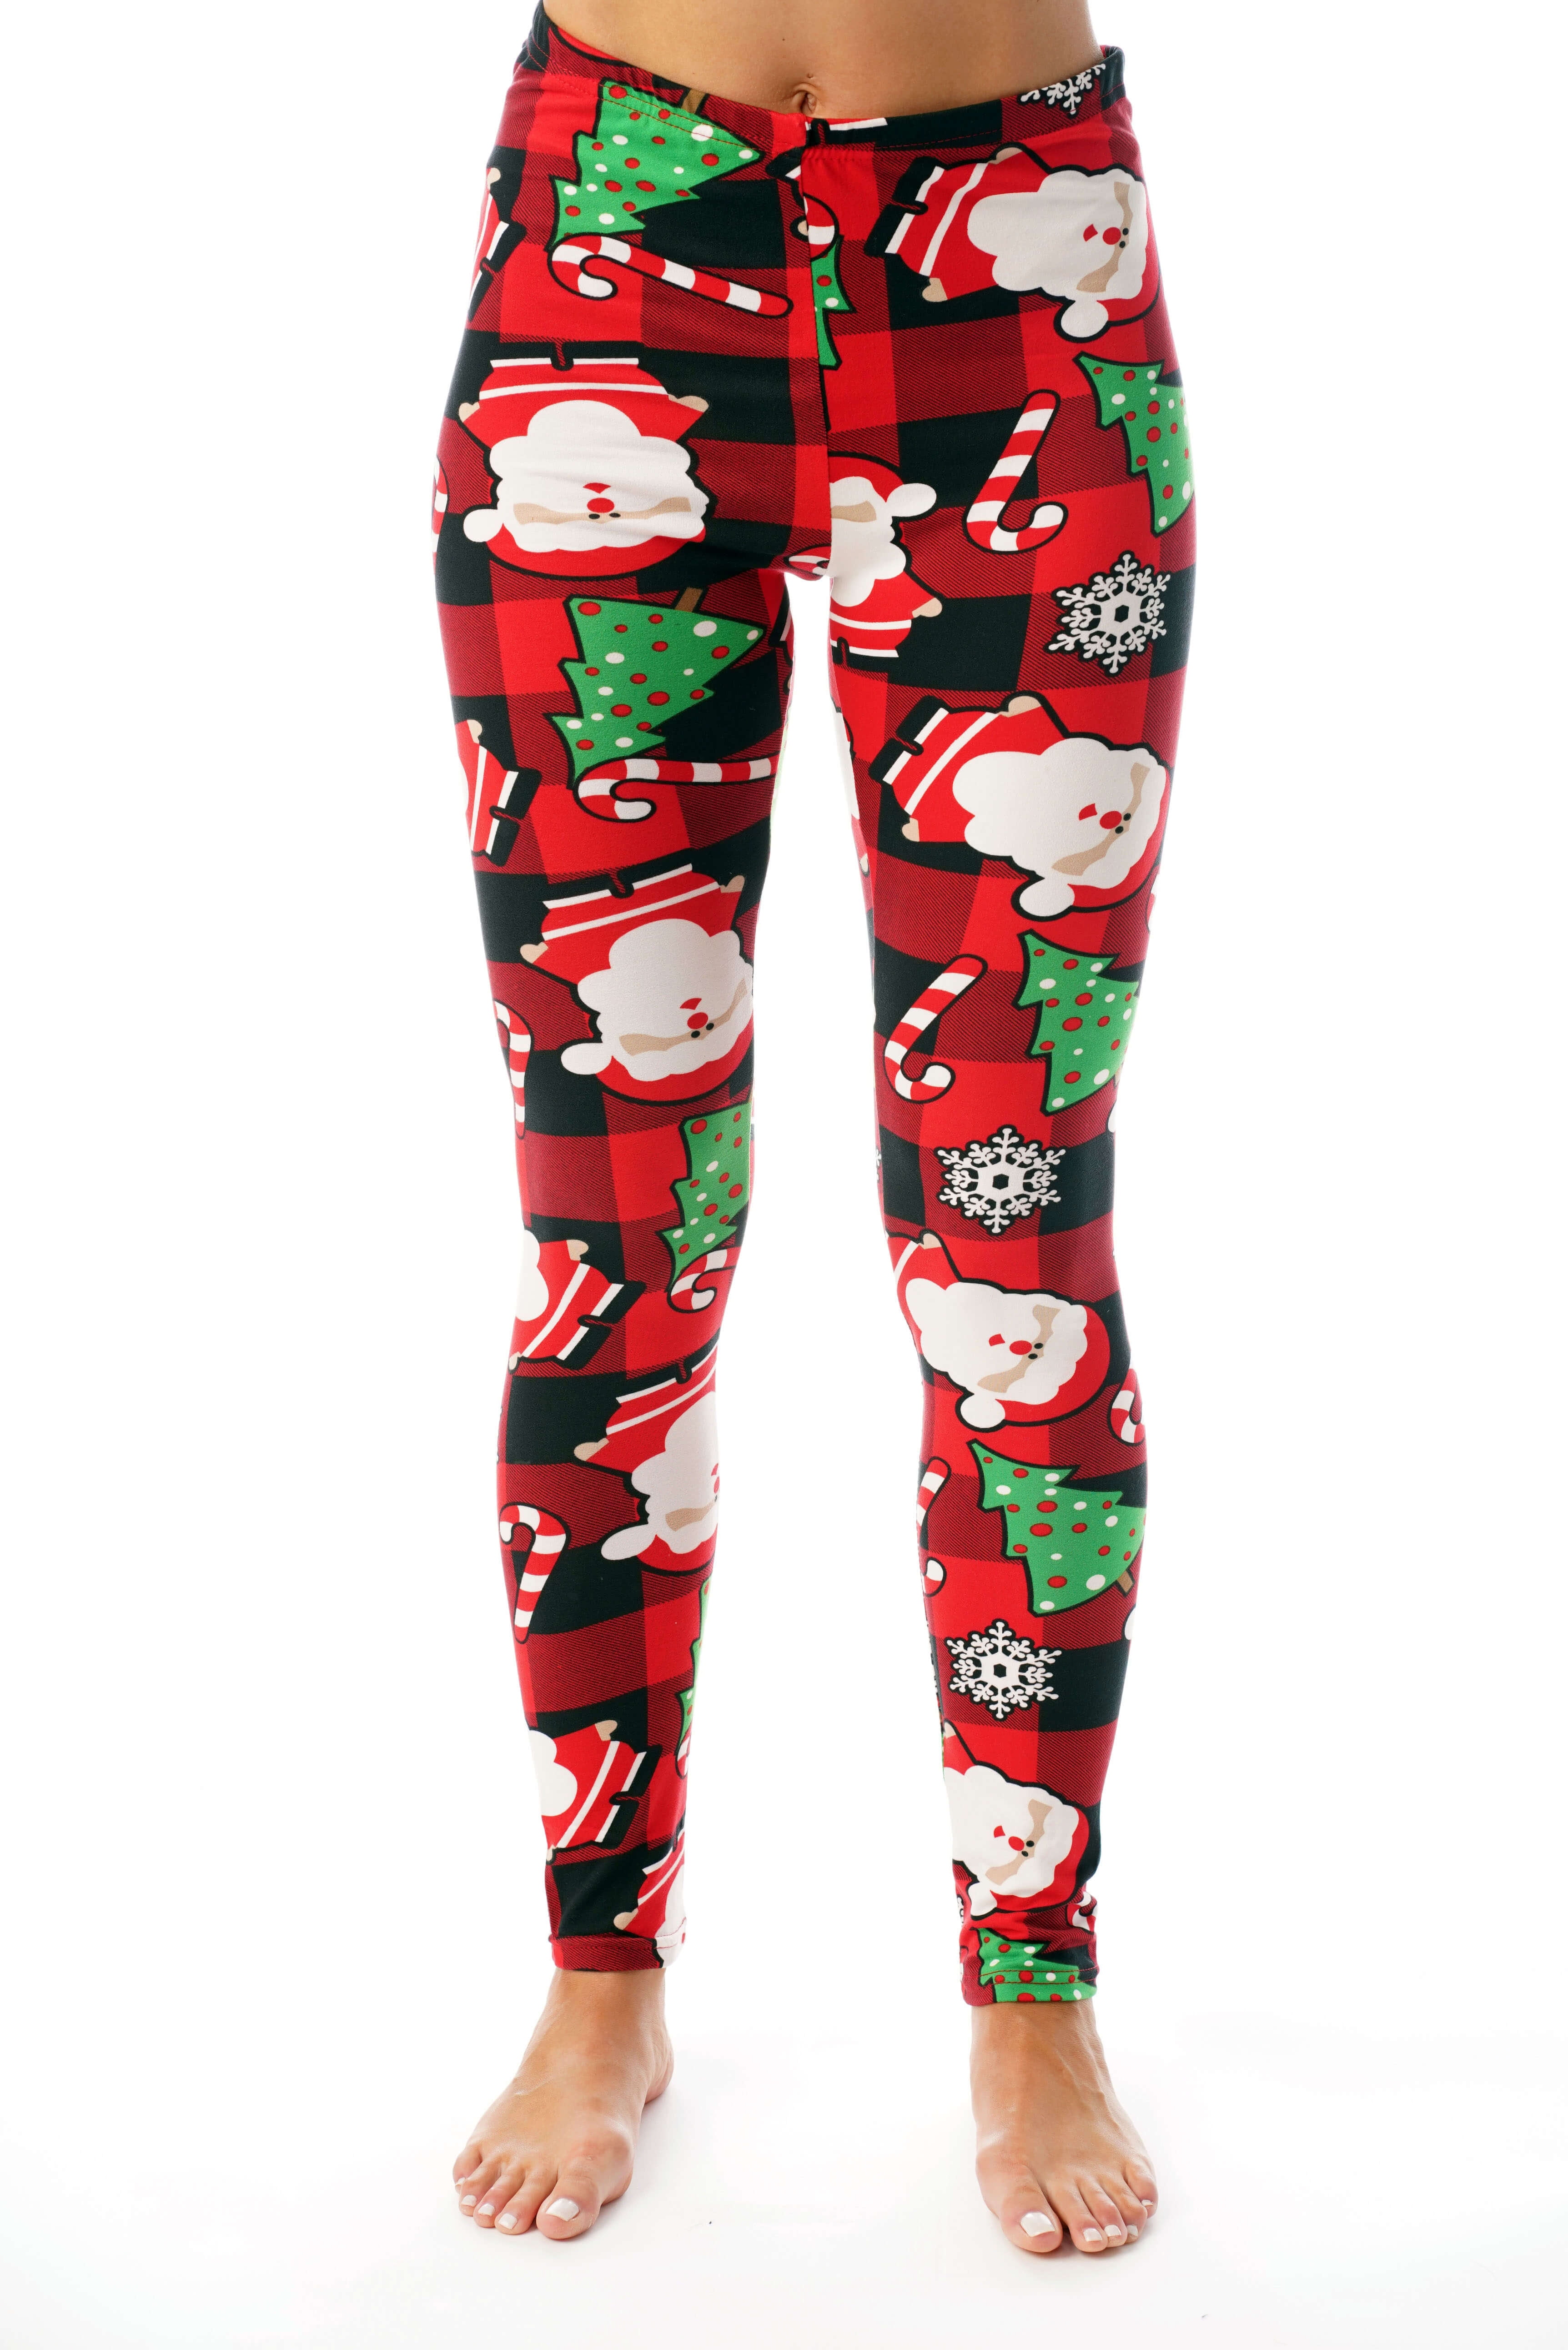 Just Love Ugly Christmas Holiday Leggings (Candycane Snowflake Fairisle,  Medium)